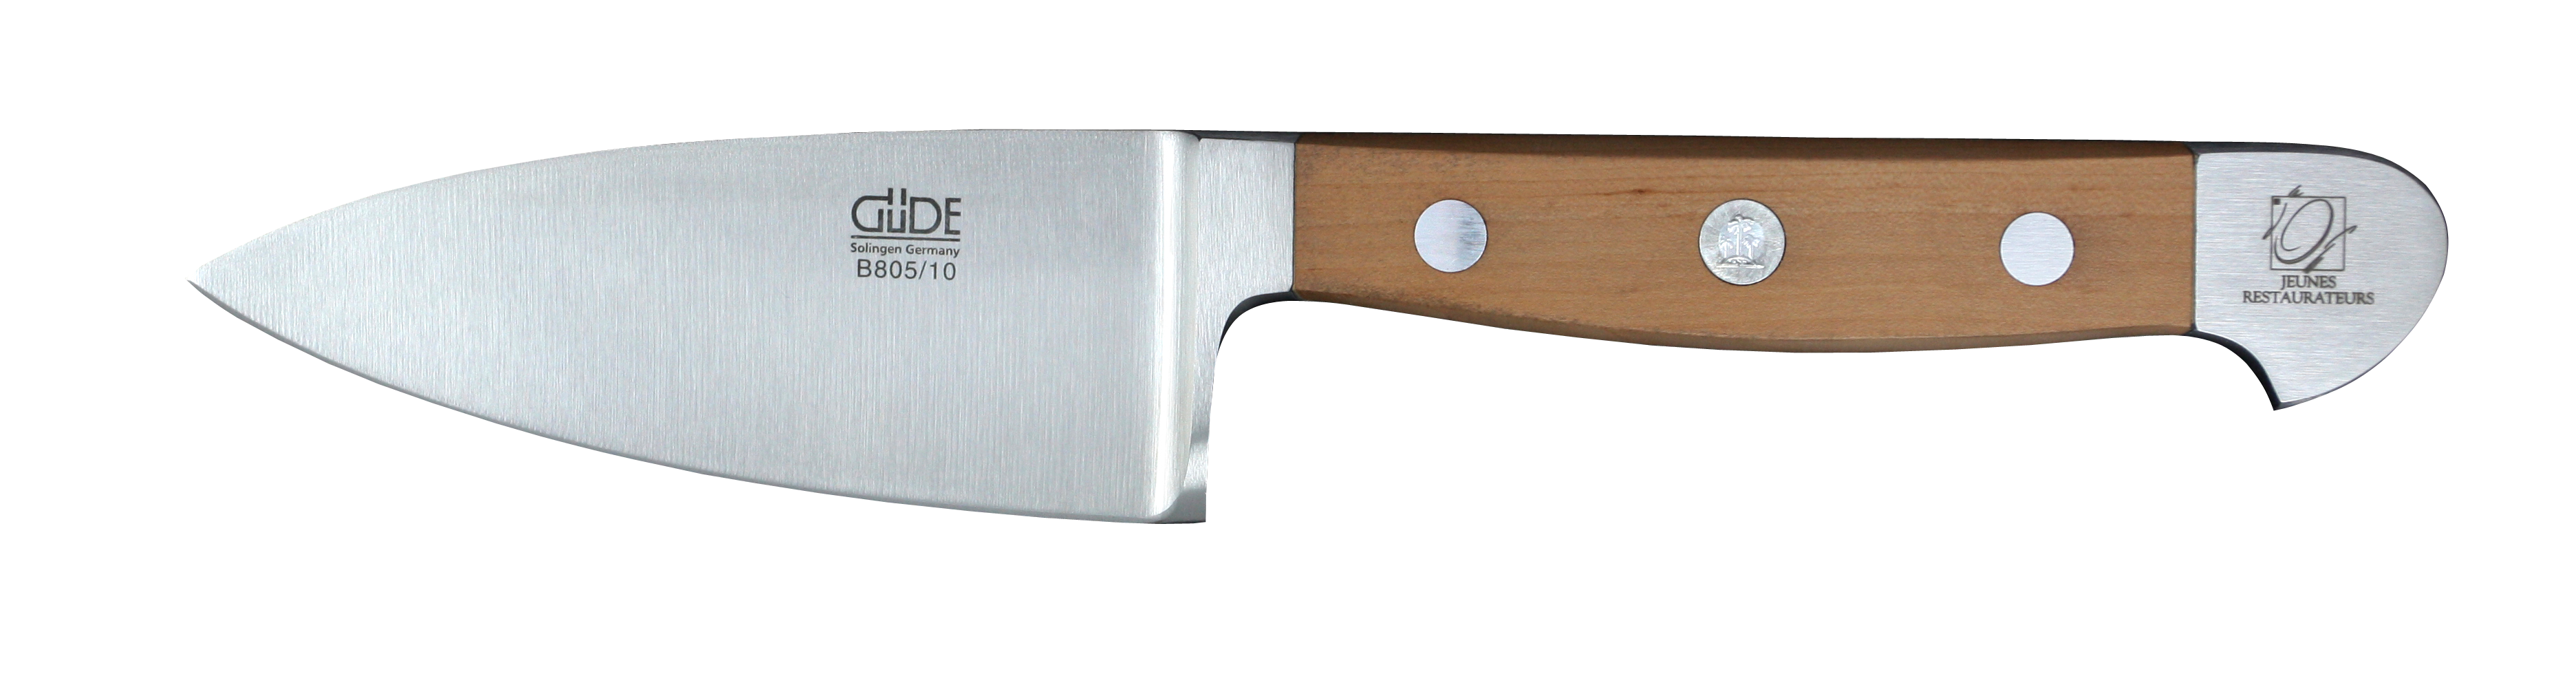 Güde Alpha Birne Hartkäsemesser 10 cm / CVM-Messerstahl mit Griffschalen aus Birnenholz